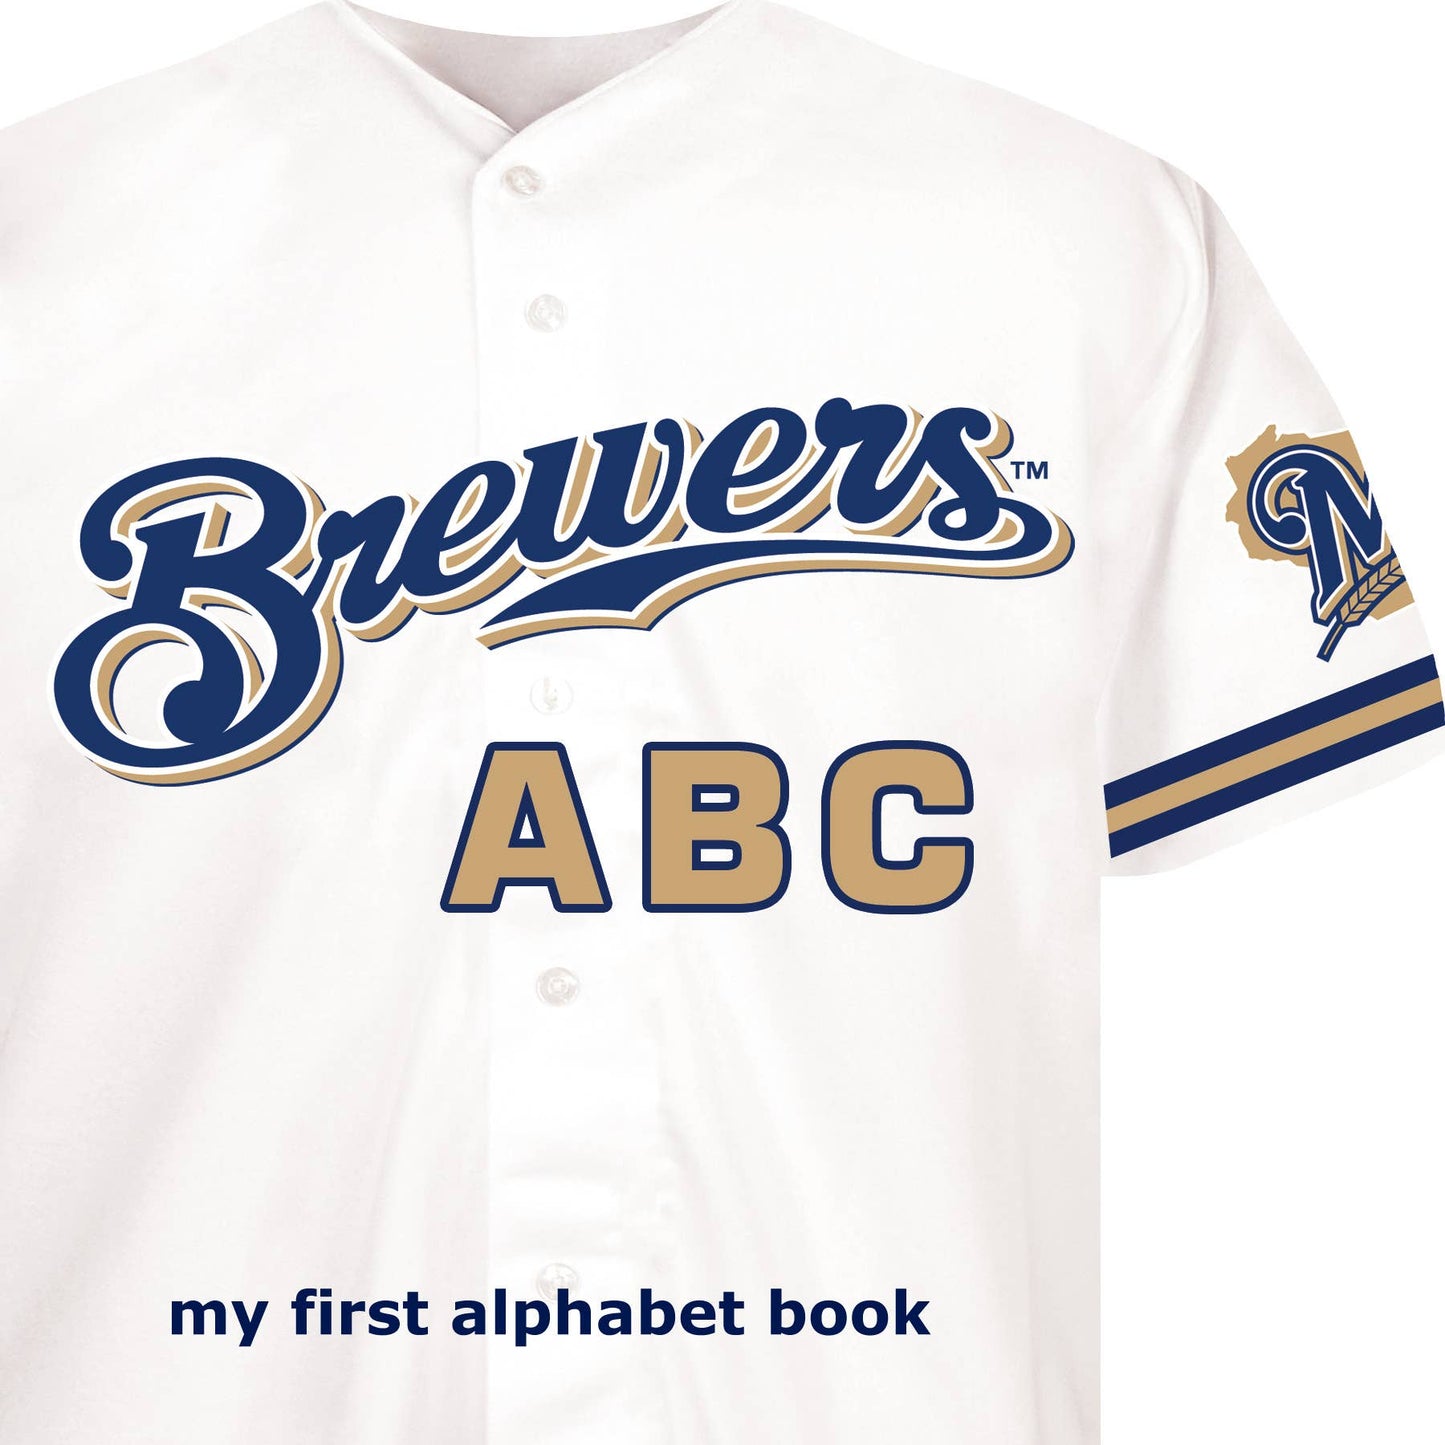 Milwaukee Brewers ABC Book